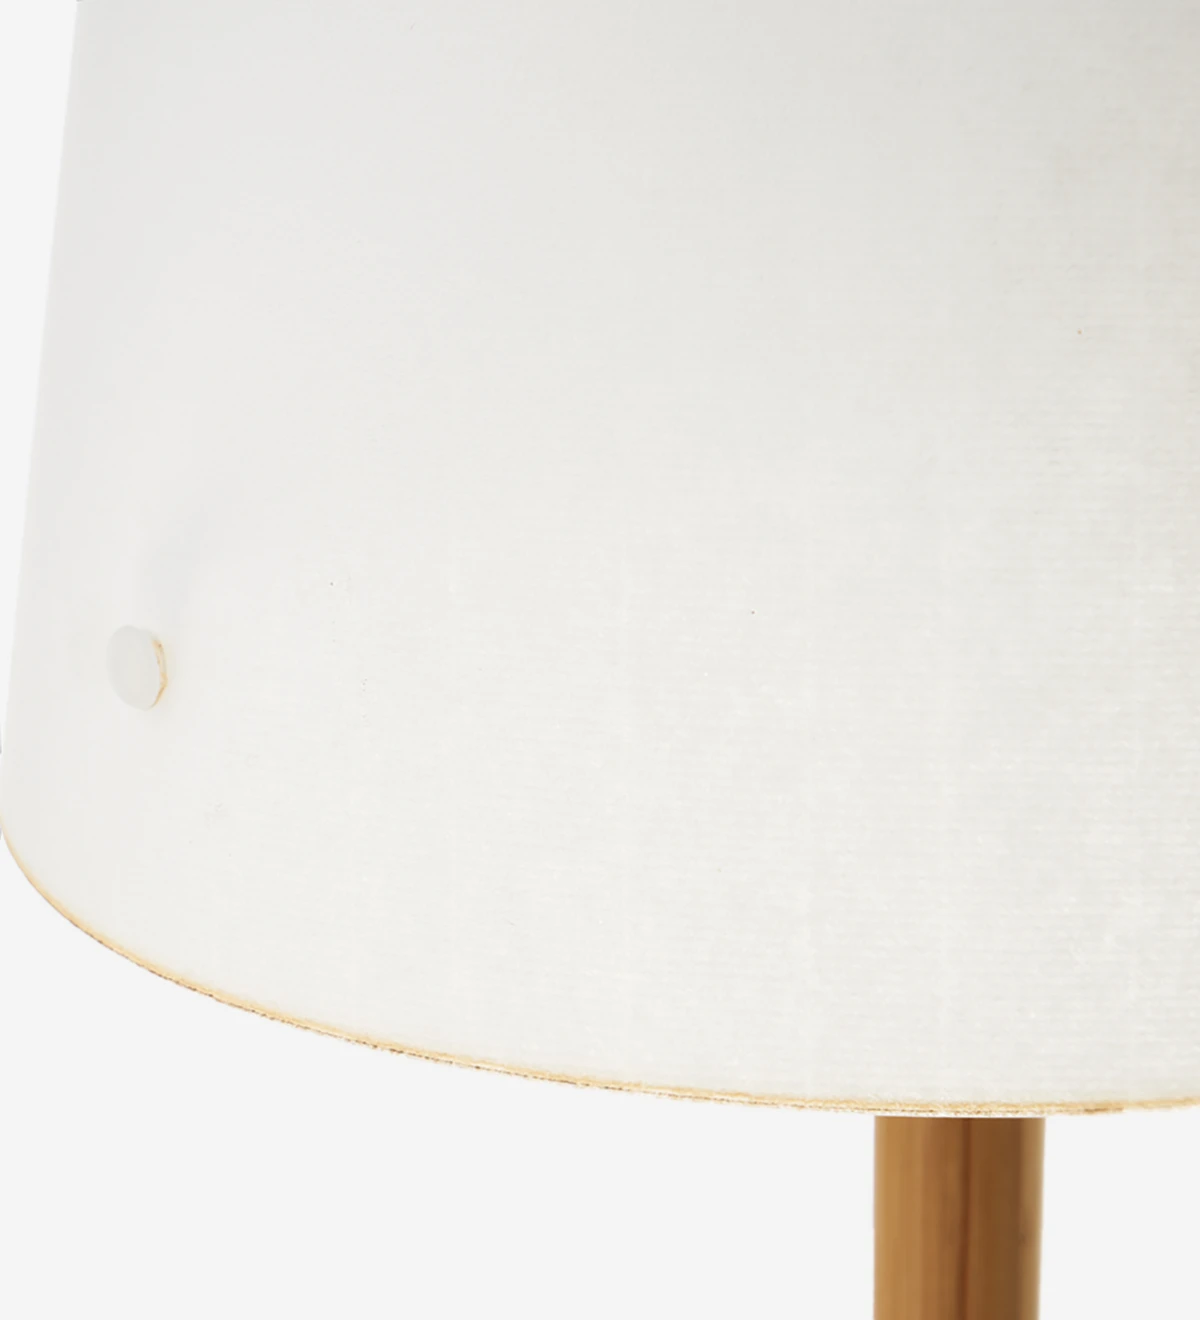 Bamboo table lamp.